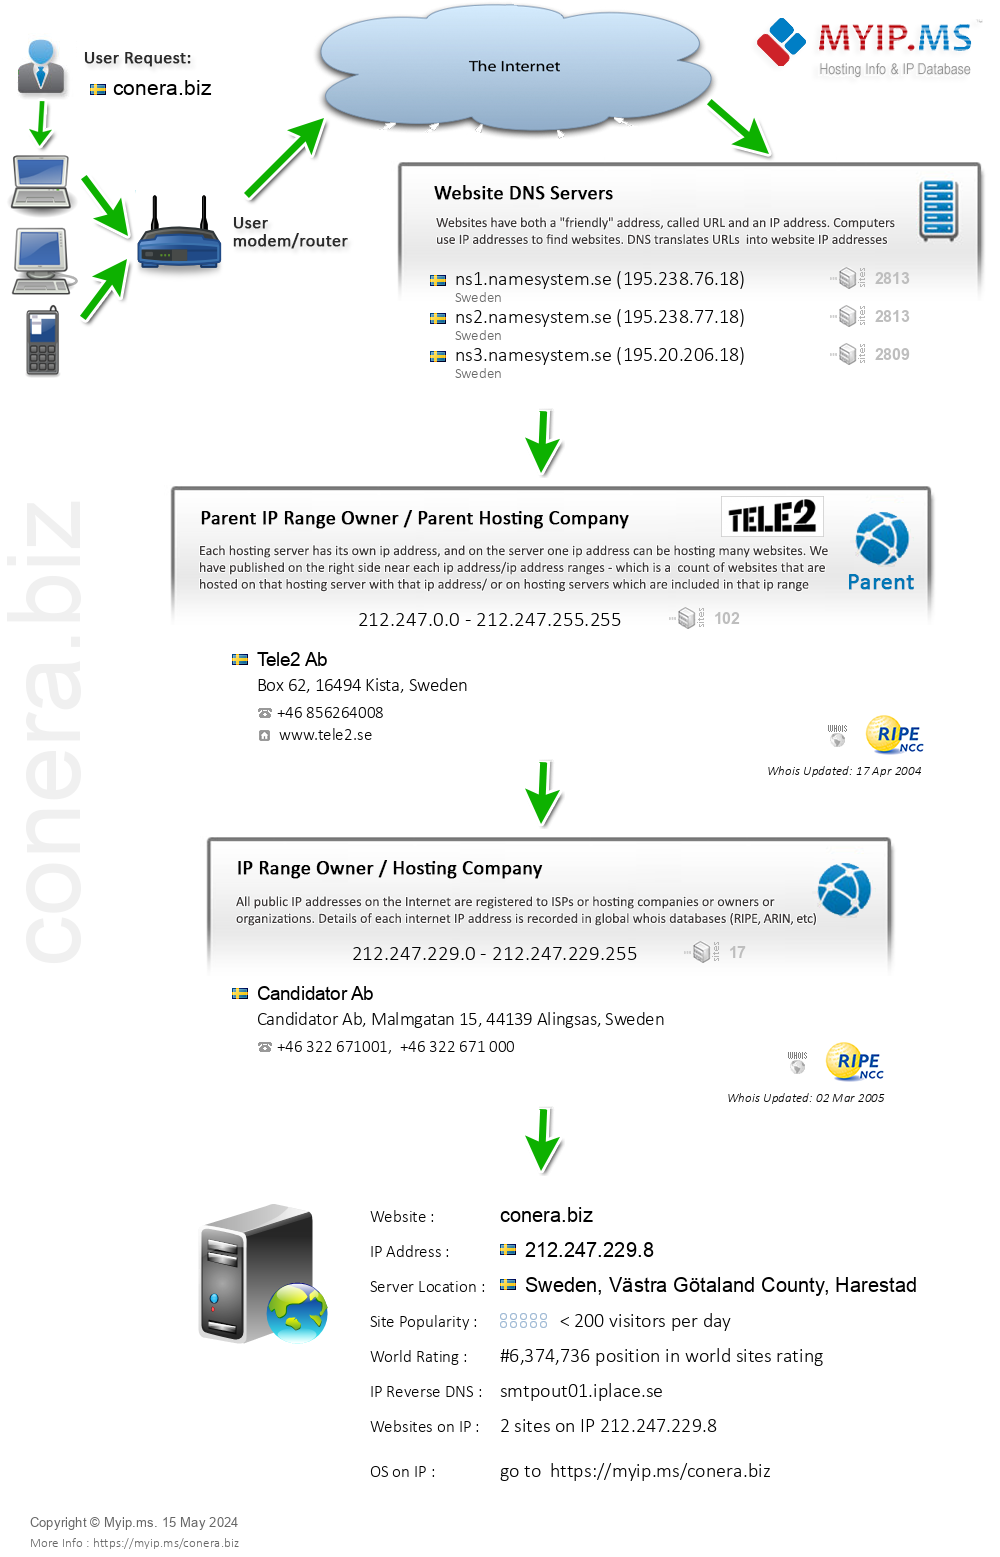 Conera.biz - Website Hosting Visual IP Diagram